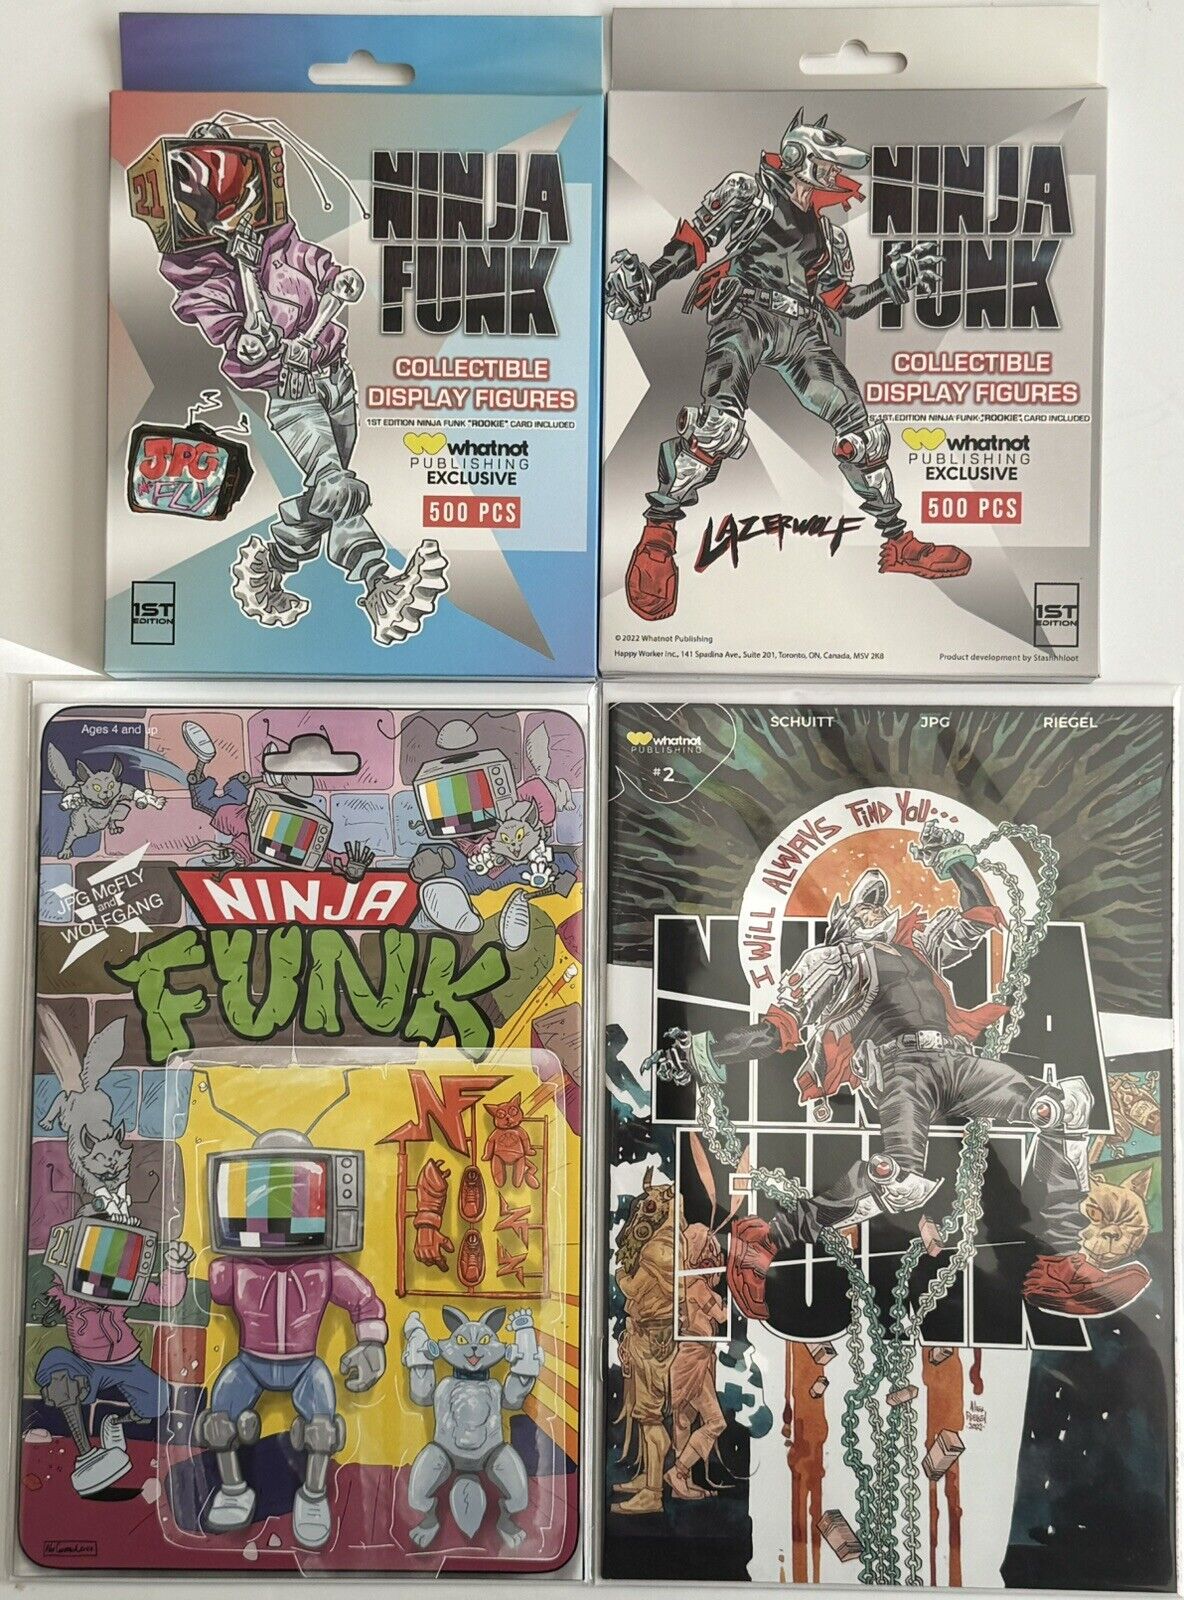 Ninja Funk #1 & 2 / 2 Collectible Display Figures JPG McFly-LazerWolf/W Cards